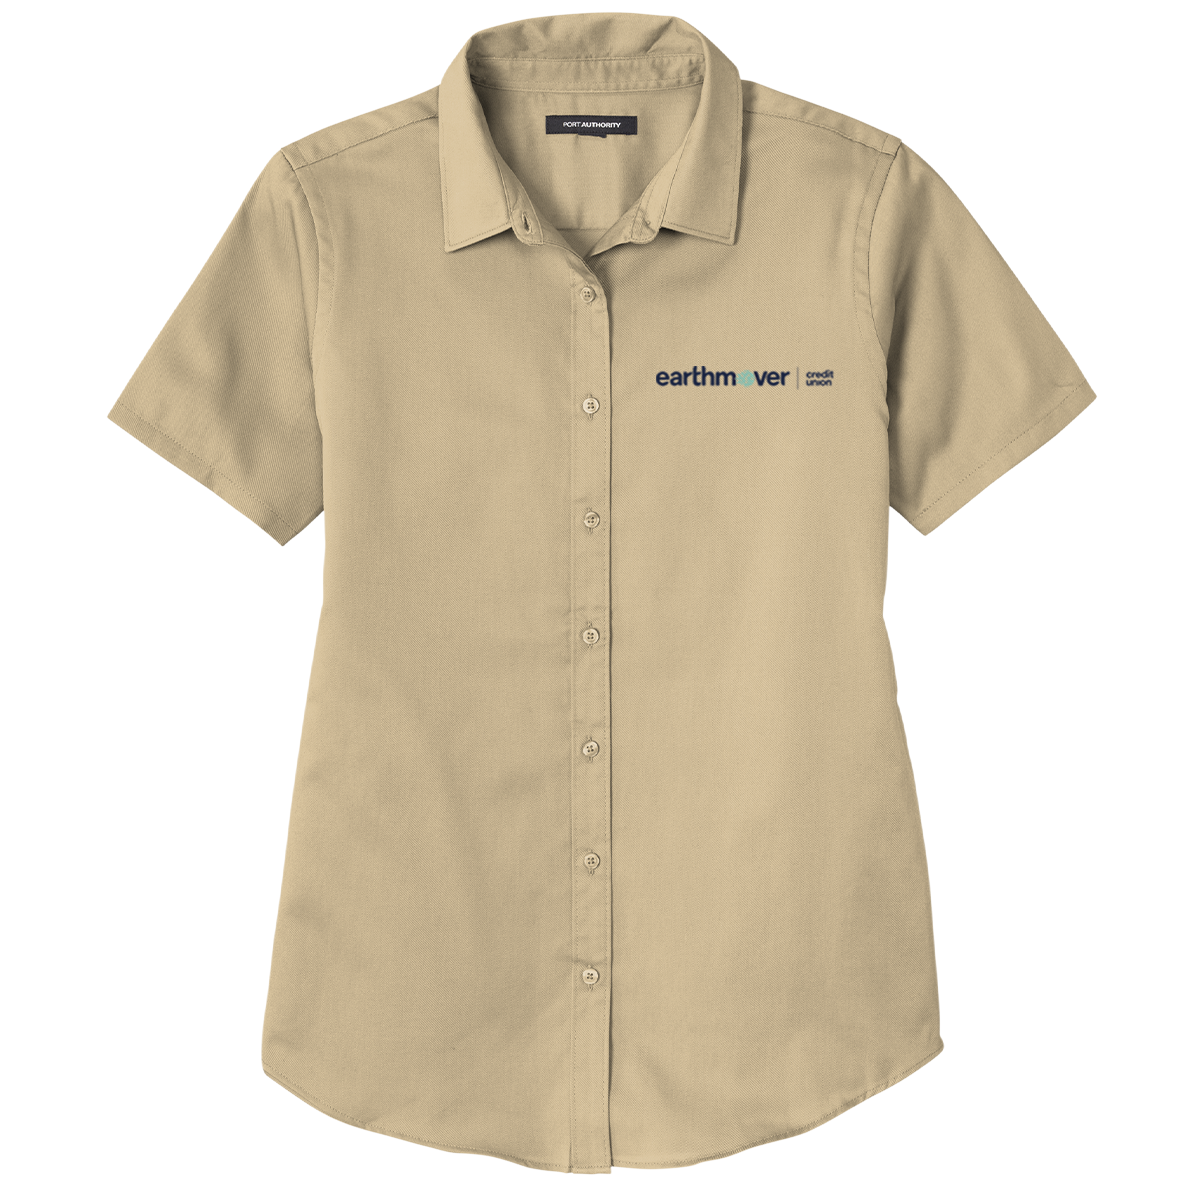 Port Authority Ladies Short Sleeve SuperPro React Twill Shirt